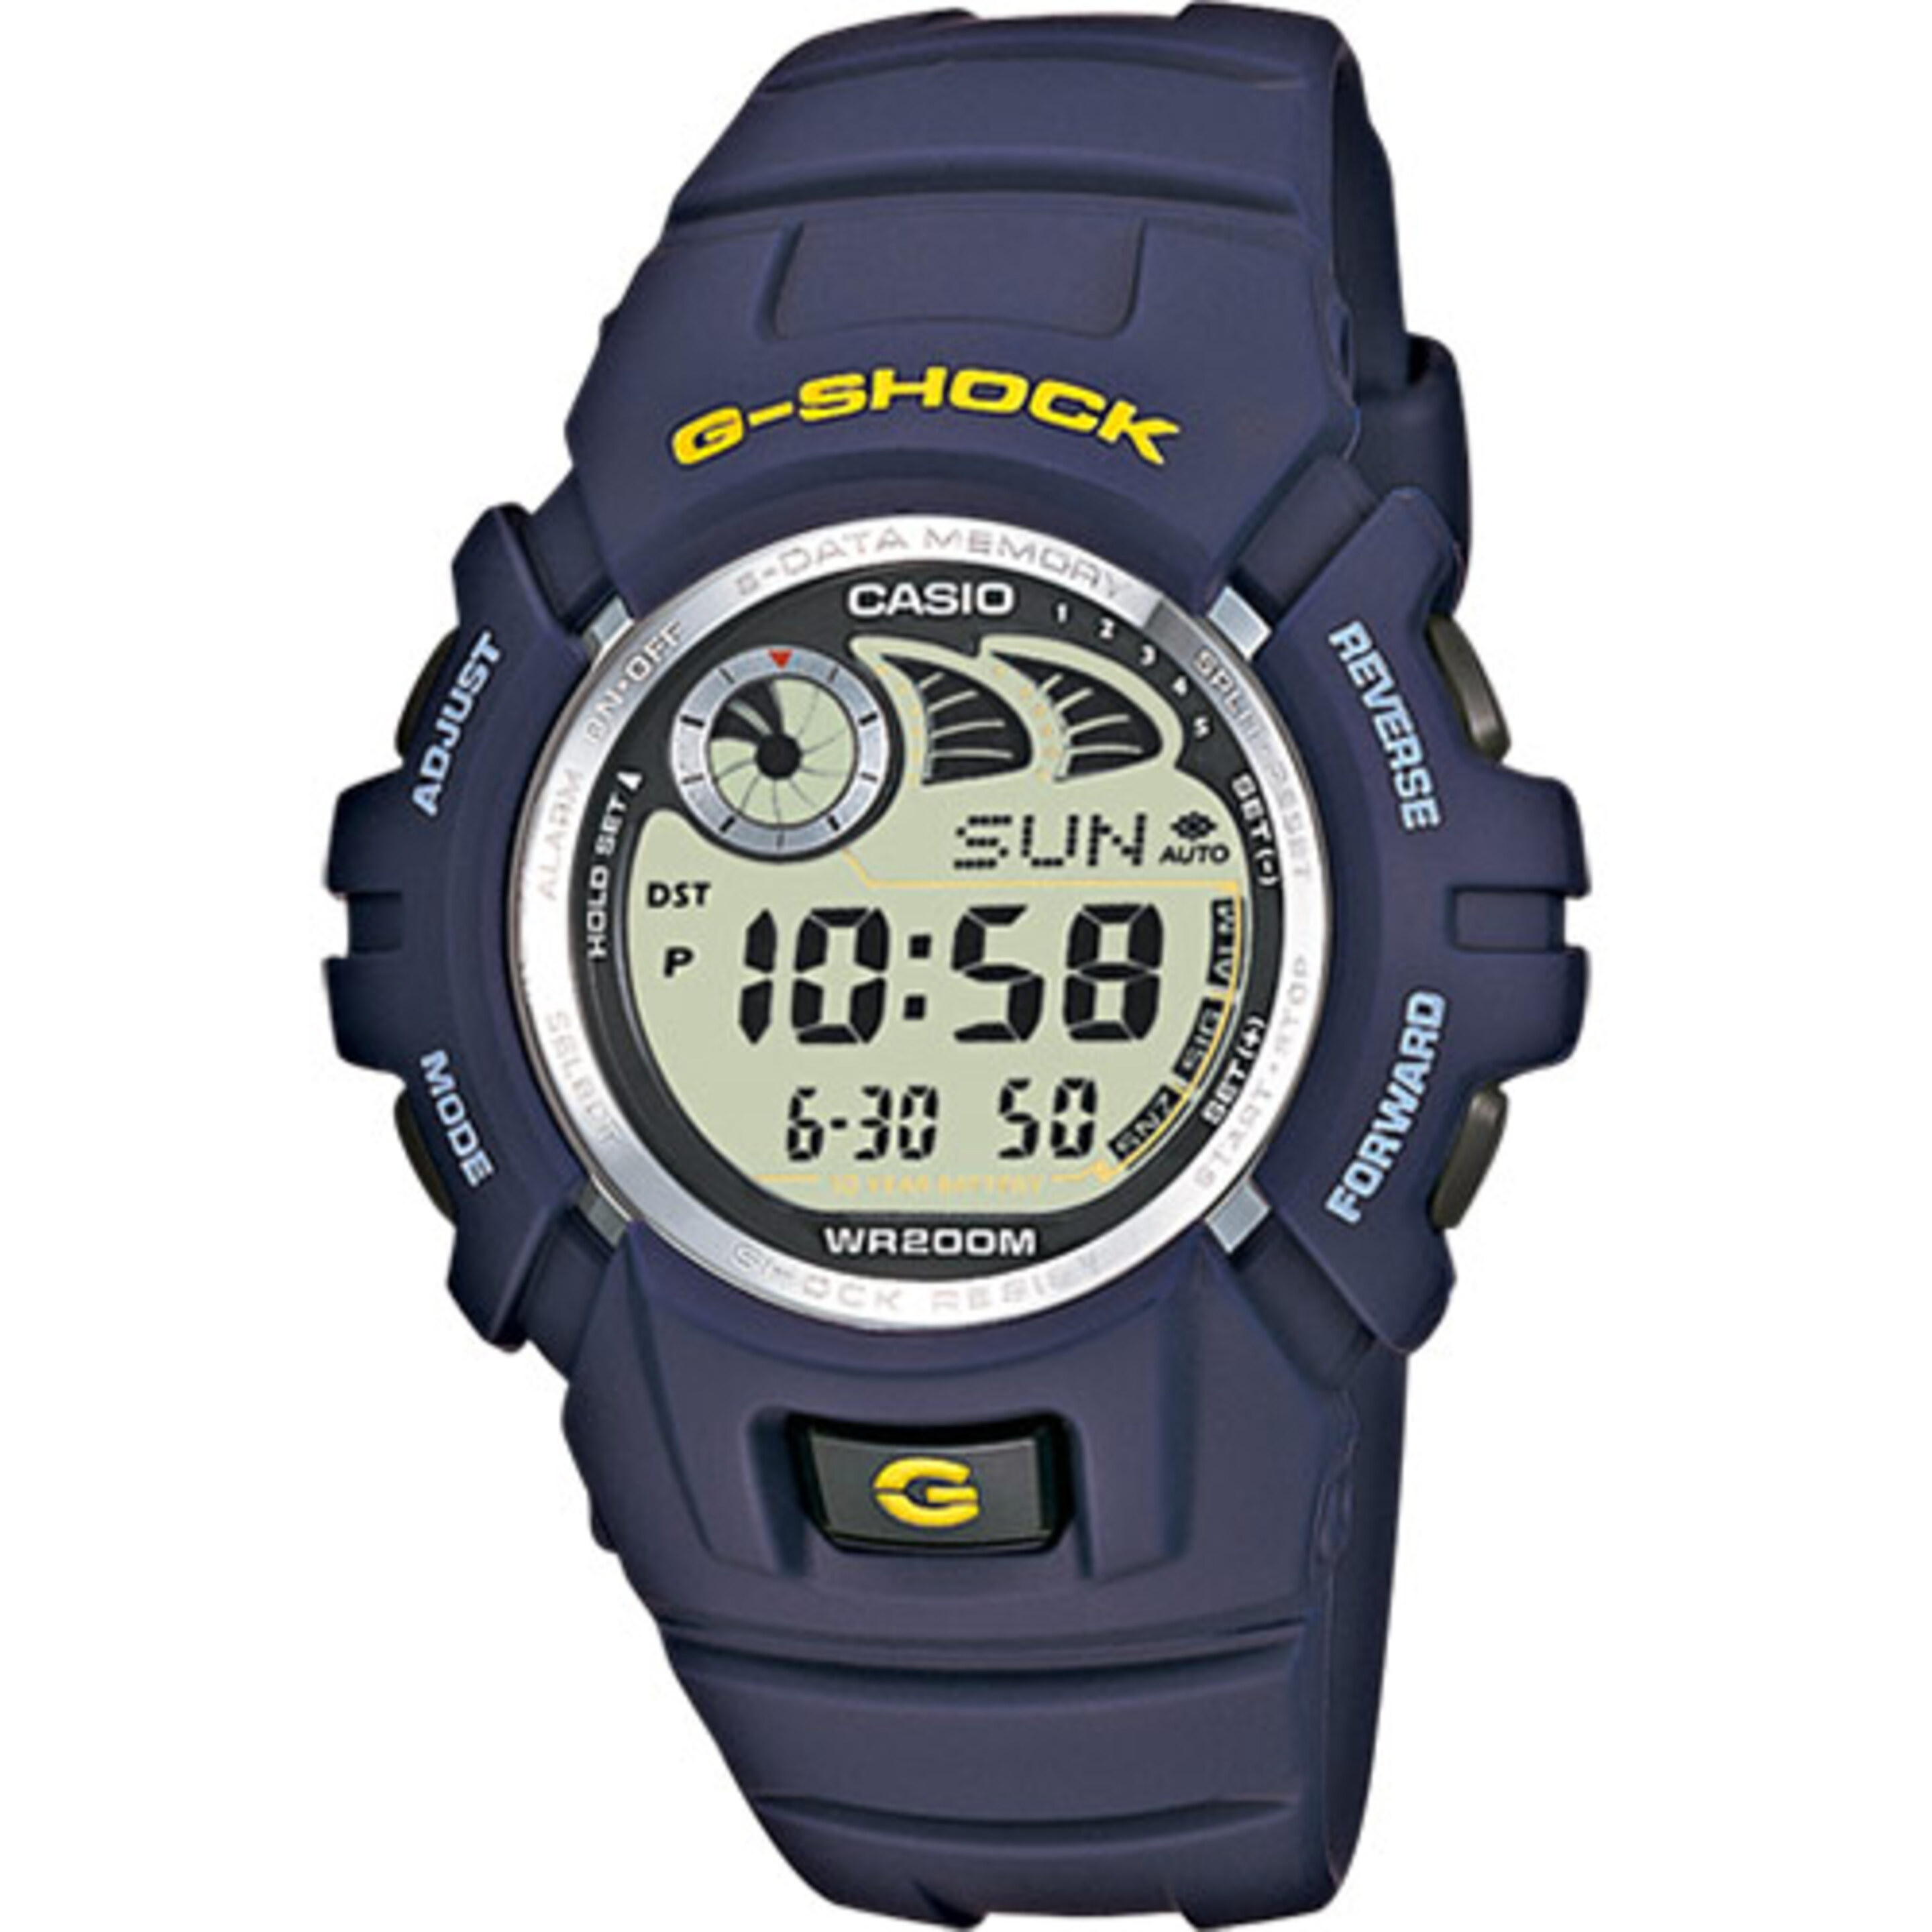 Reloj Casio G-shock G-2900f-2ver